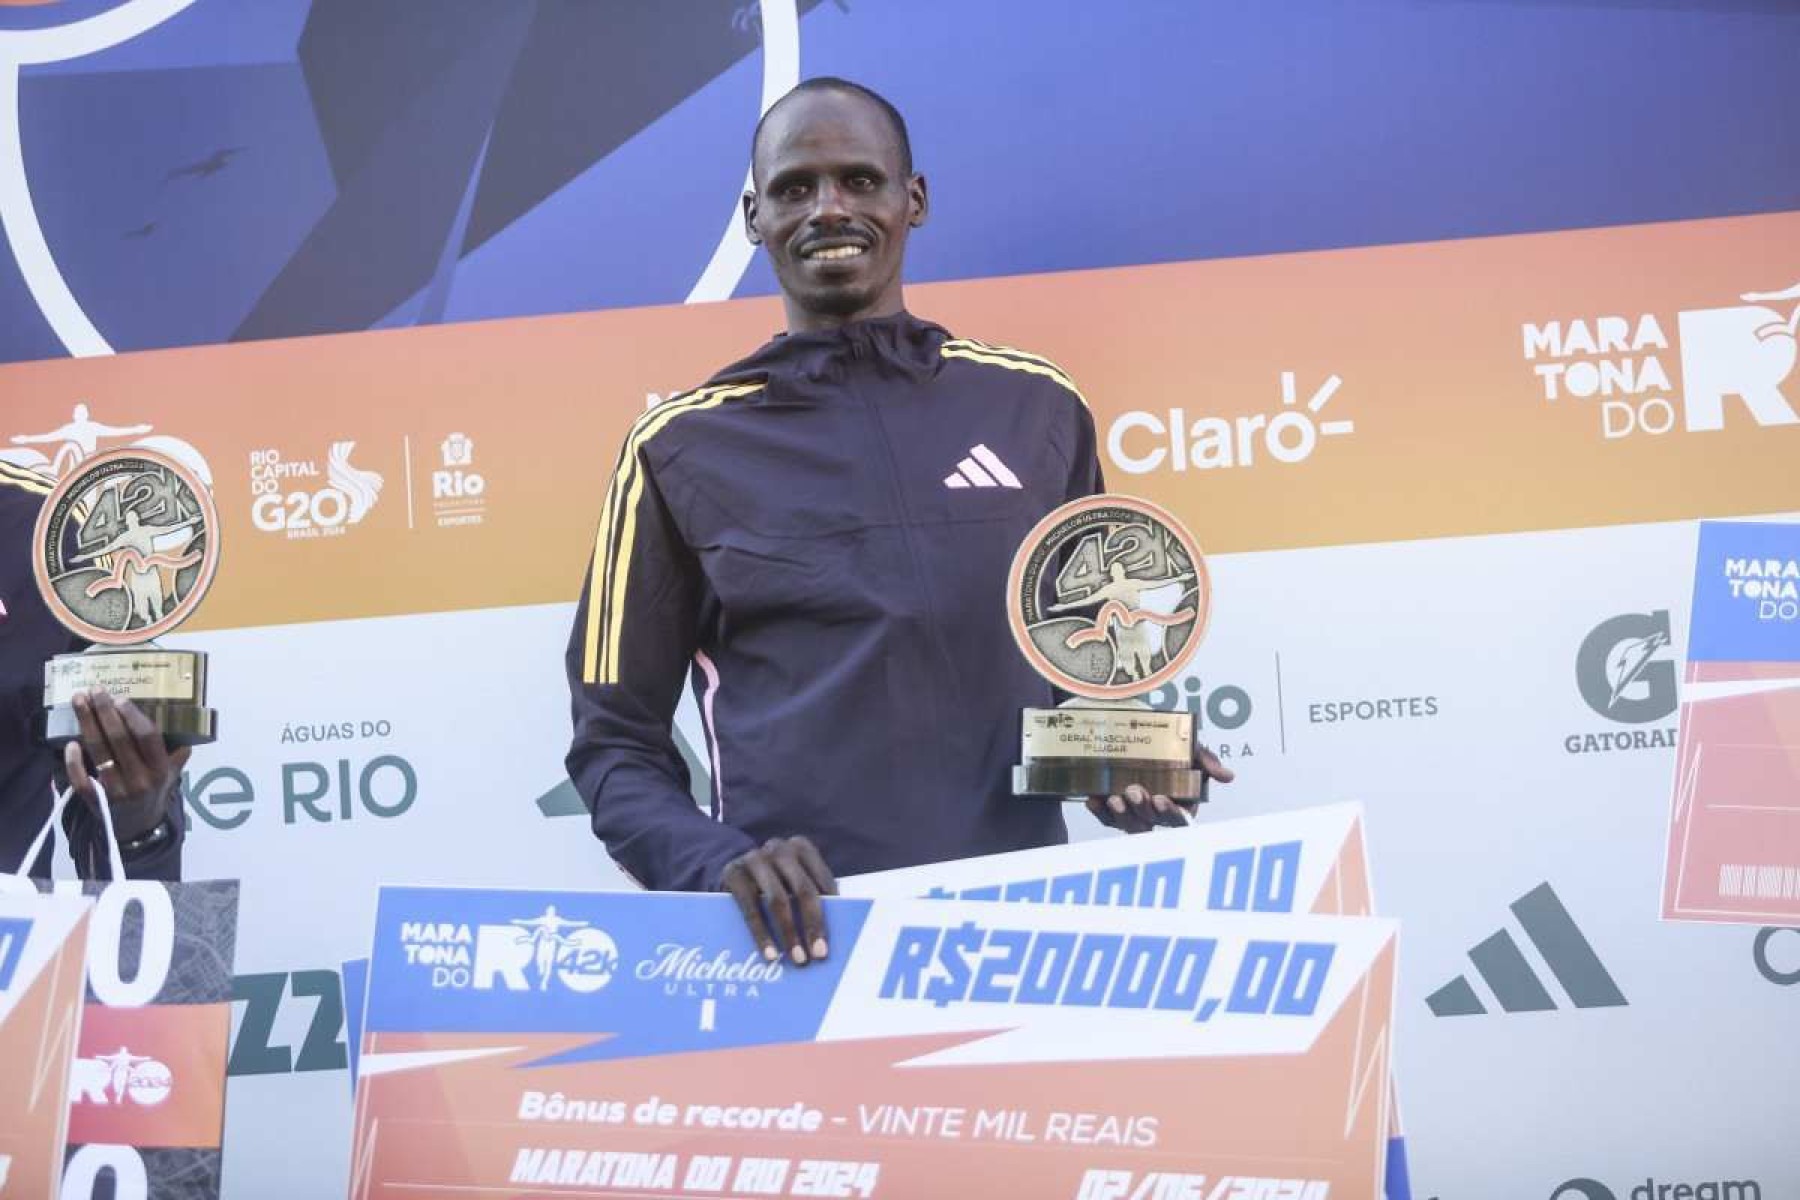 Maratona do Rio: Queniano Josphat Kiprotich bate recorde nos 42k 